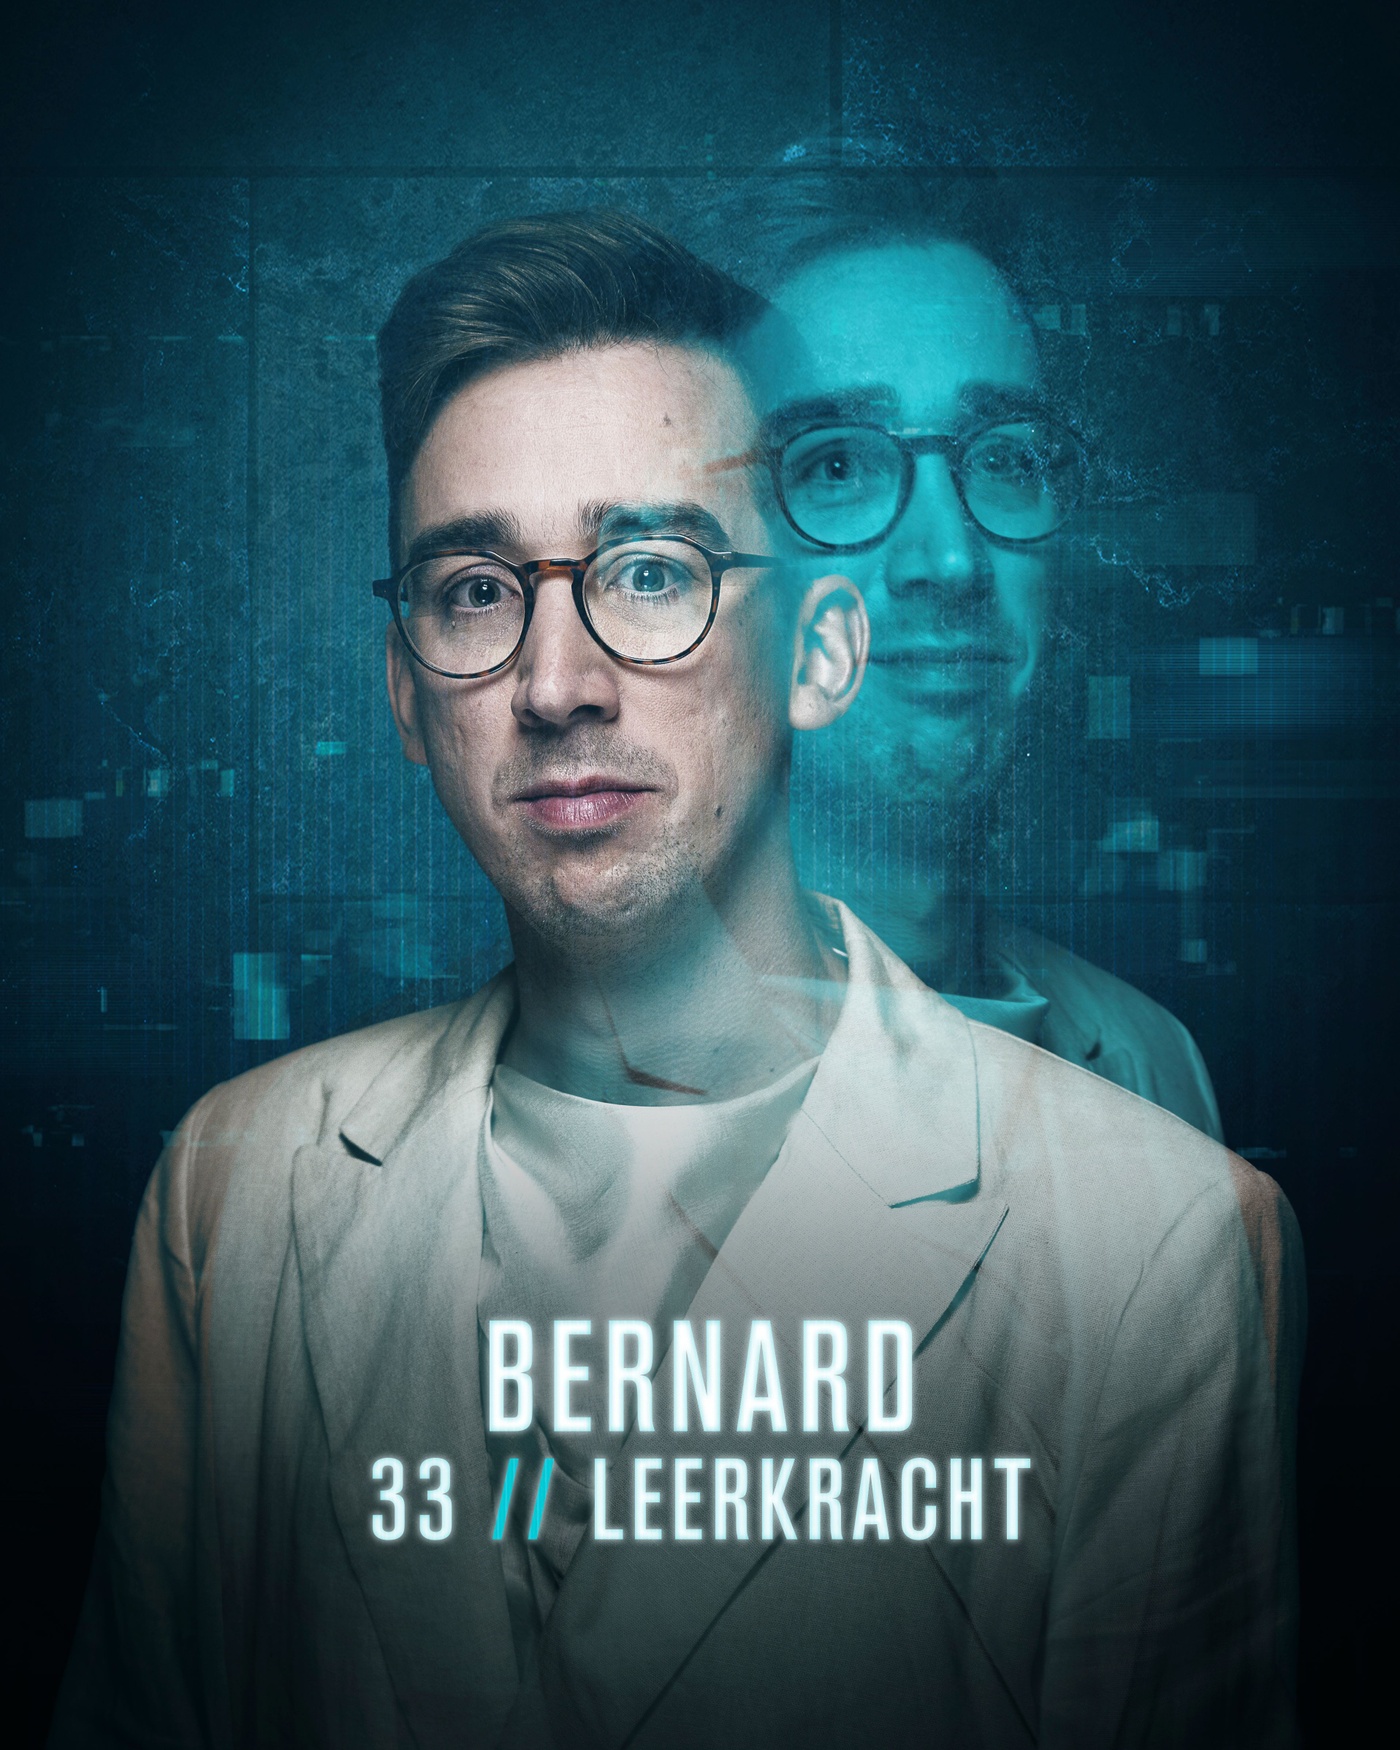 Bernard